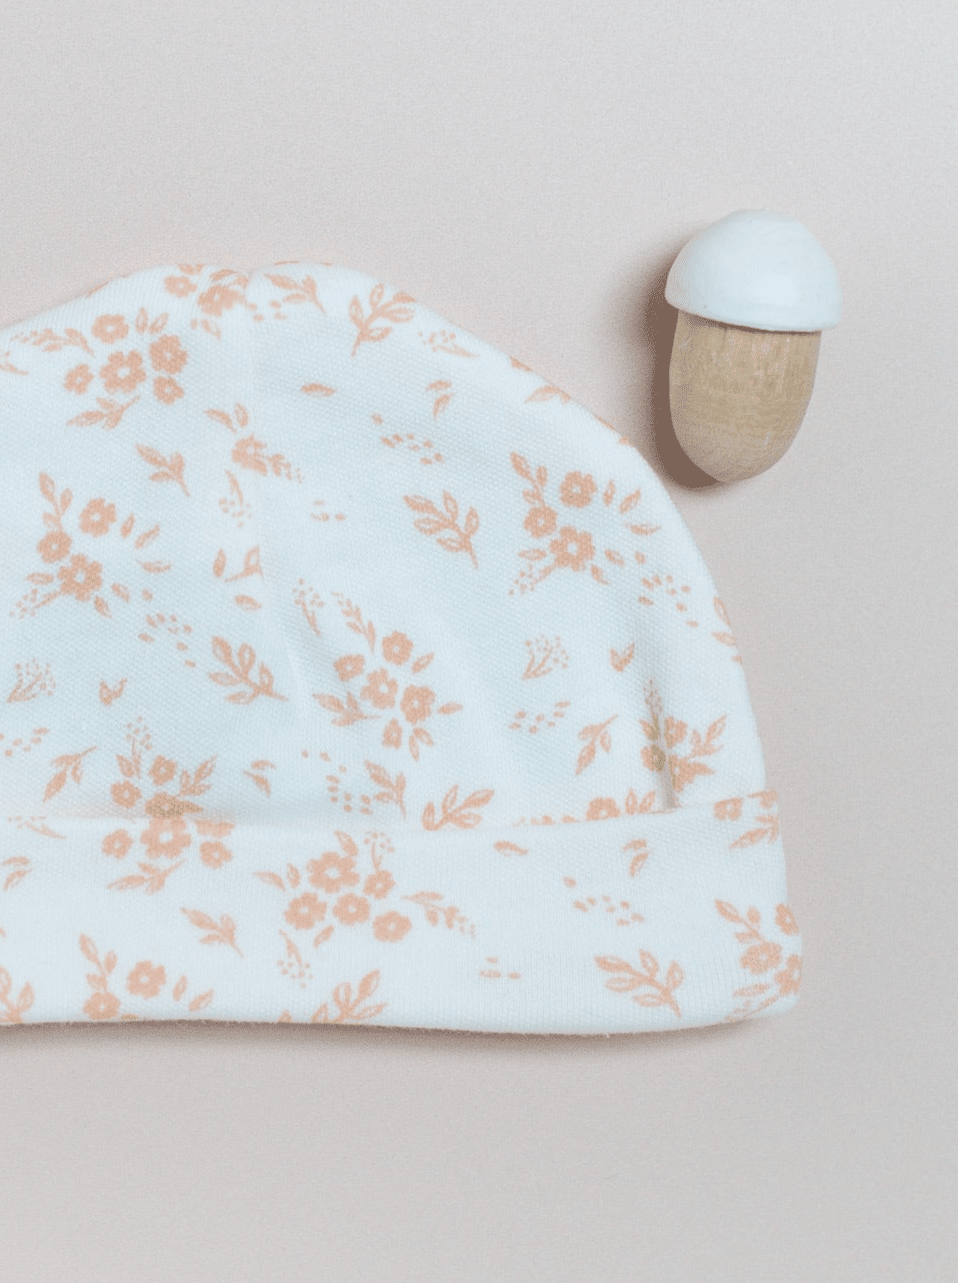 Premature Baby Hat, Apricot Floral, Premium 100% Organic Cotton Hat Tiny & Small 